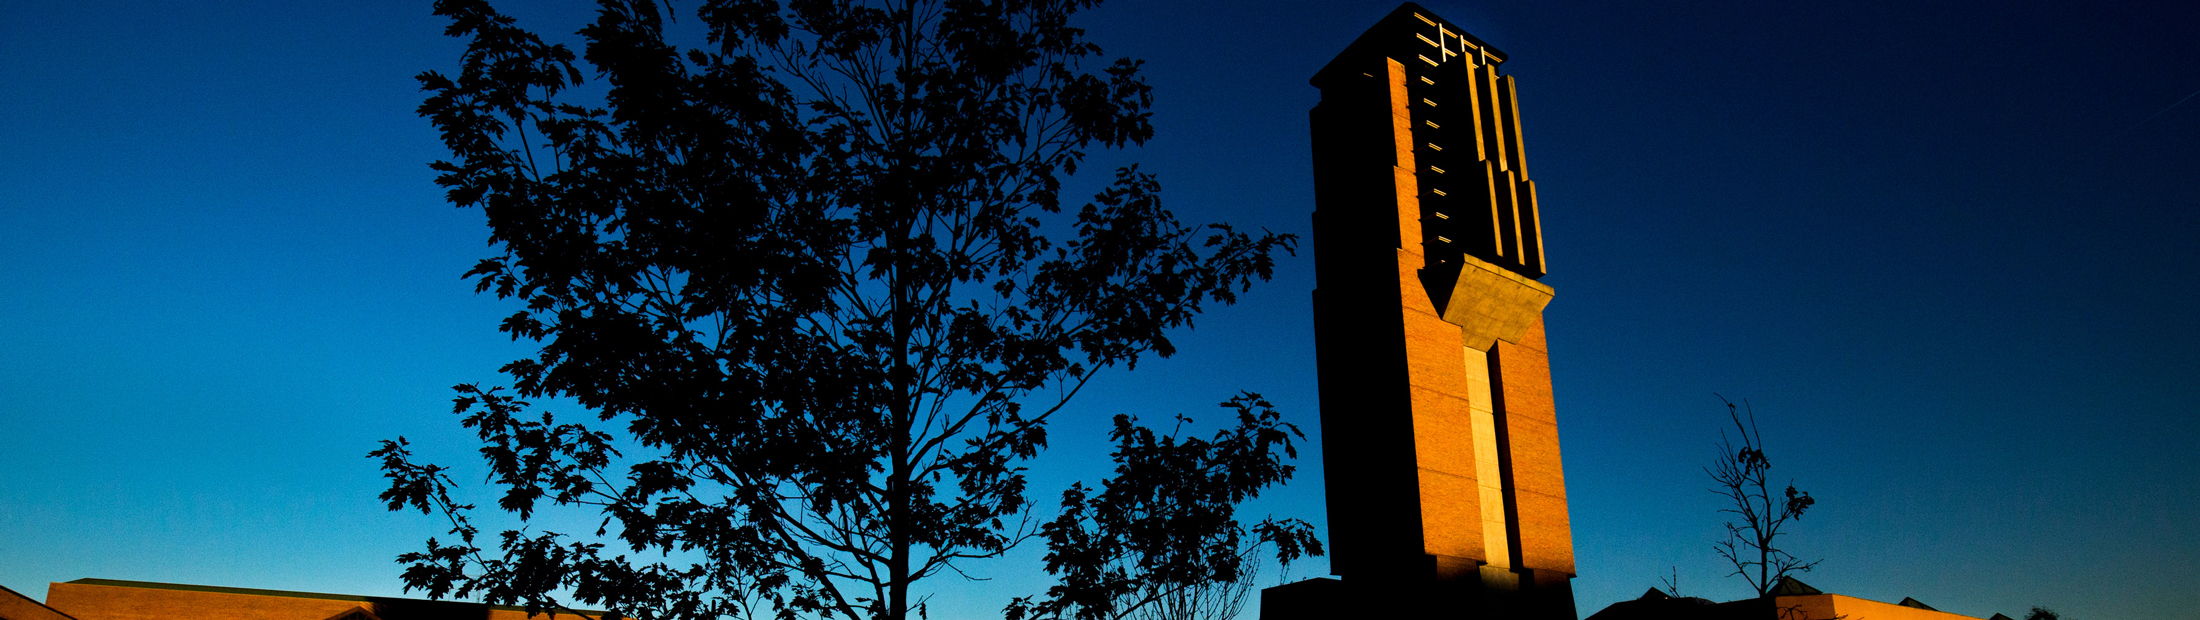 North campus tower